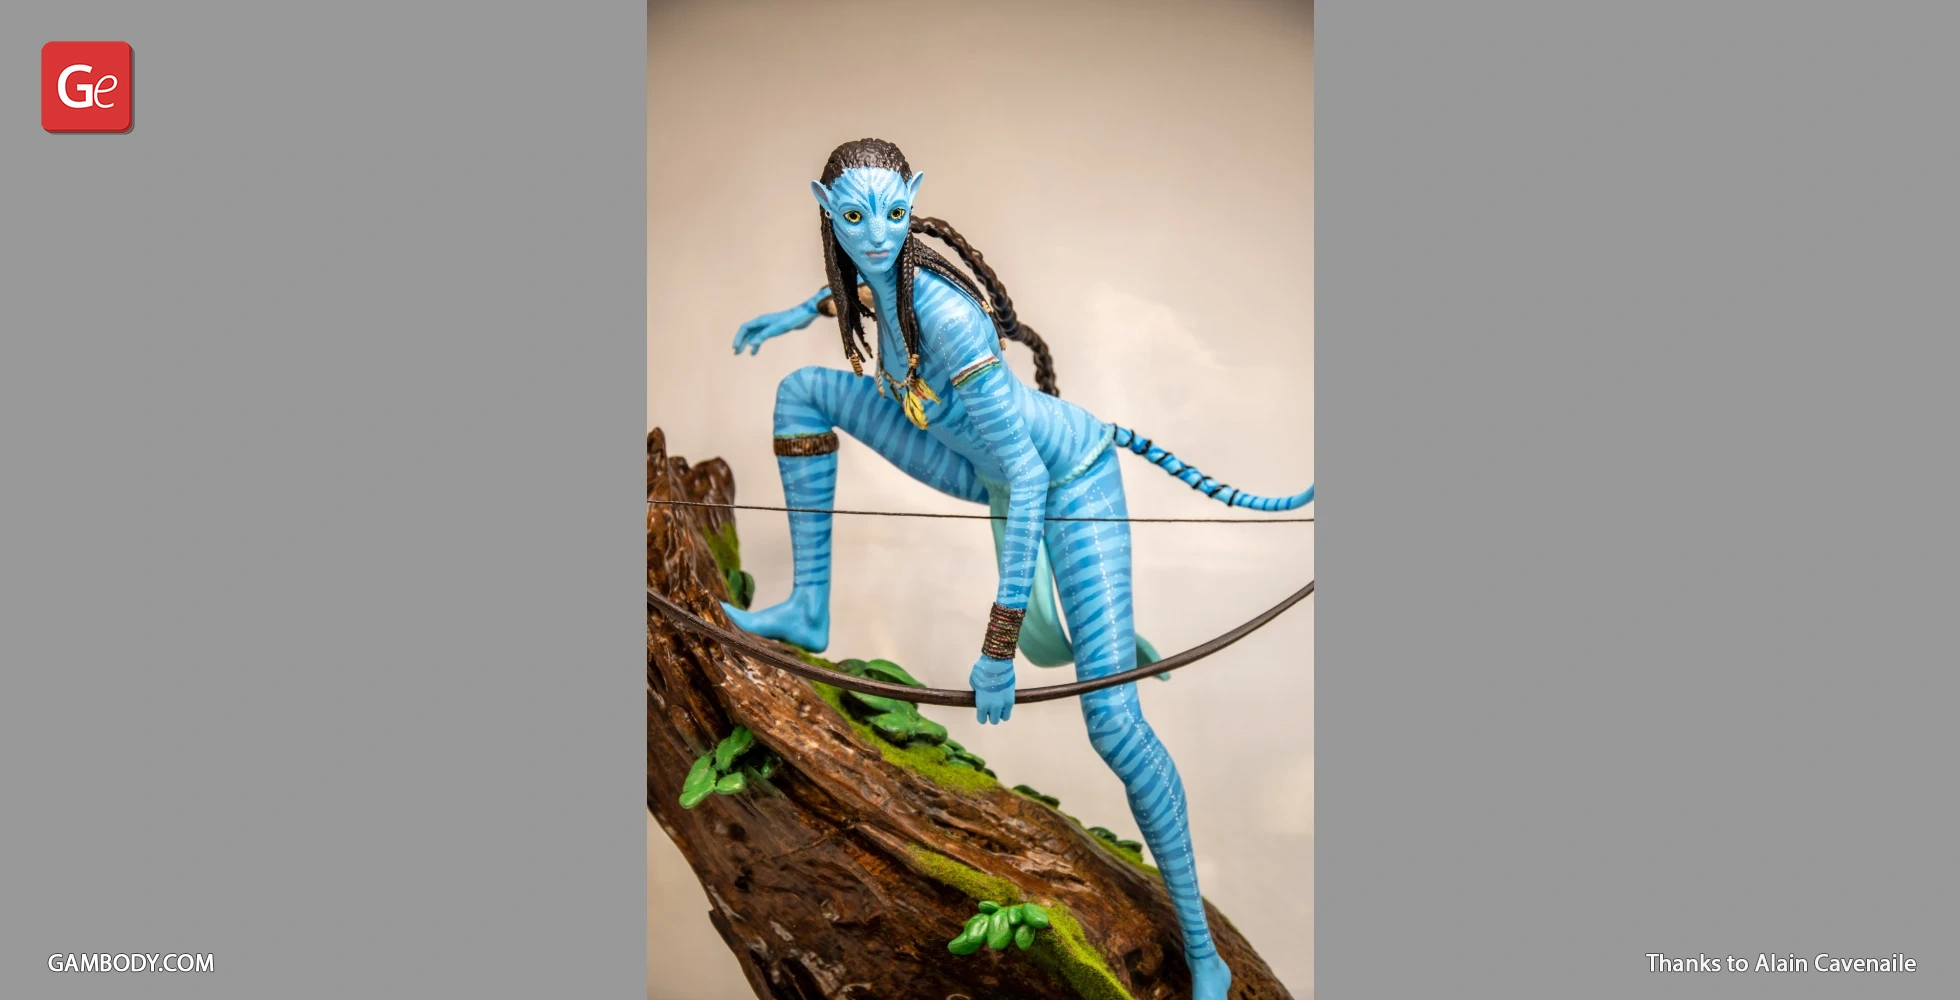 Buy Avatar Neytiri 3D Printing Figurine in Diorama | Assembly